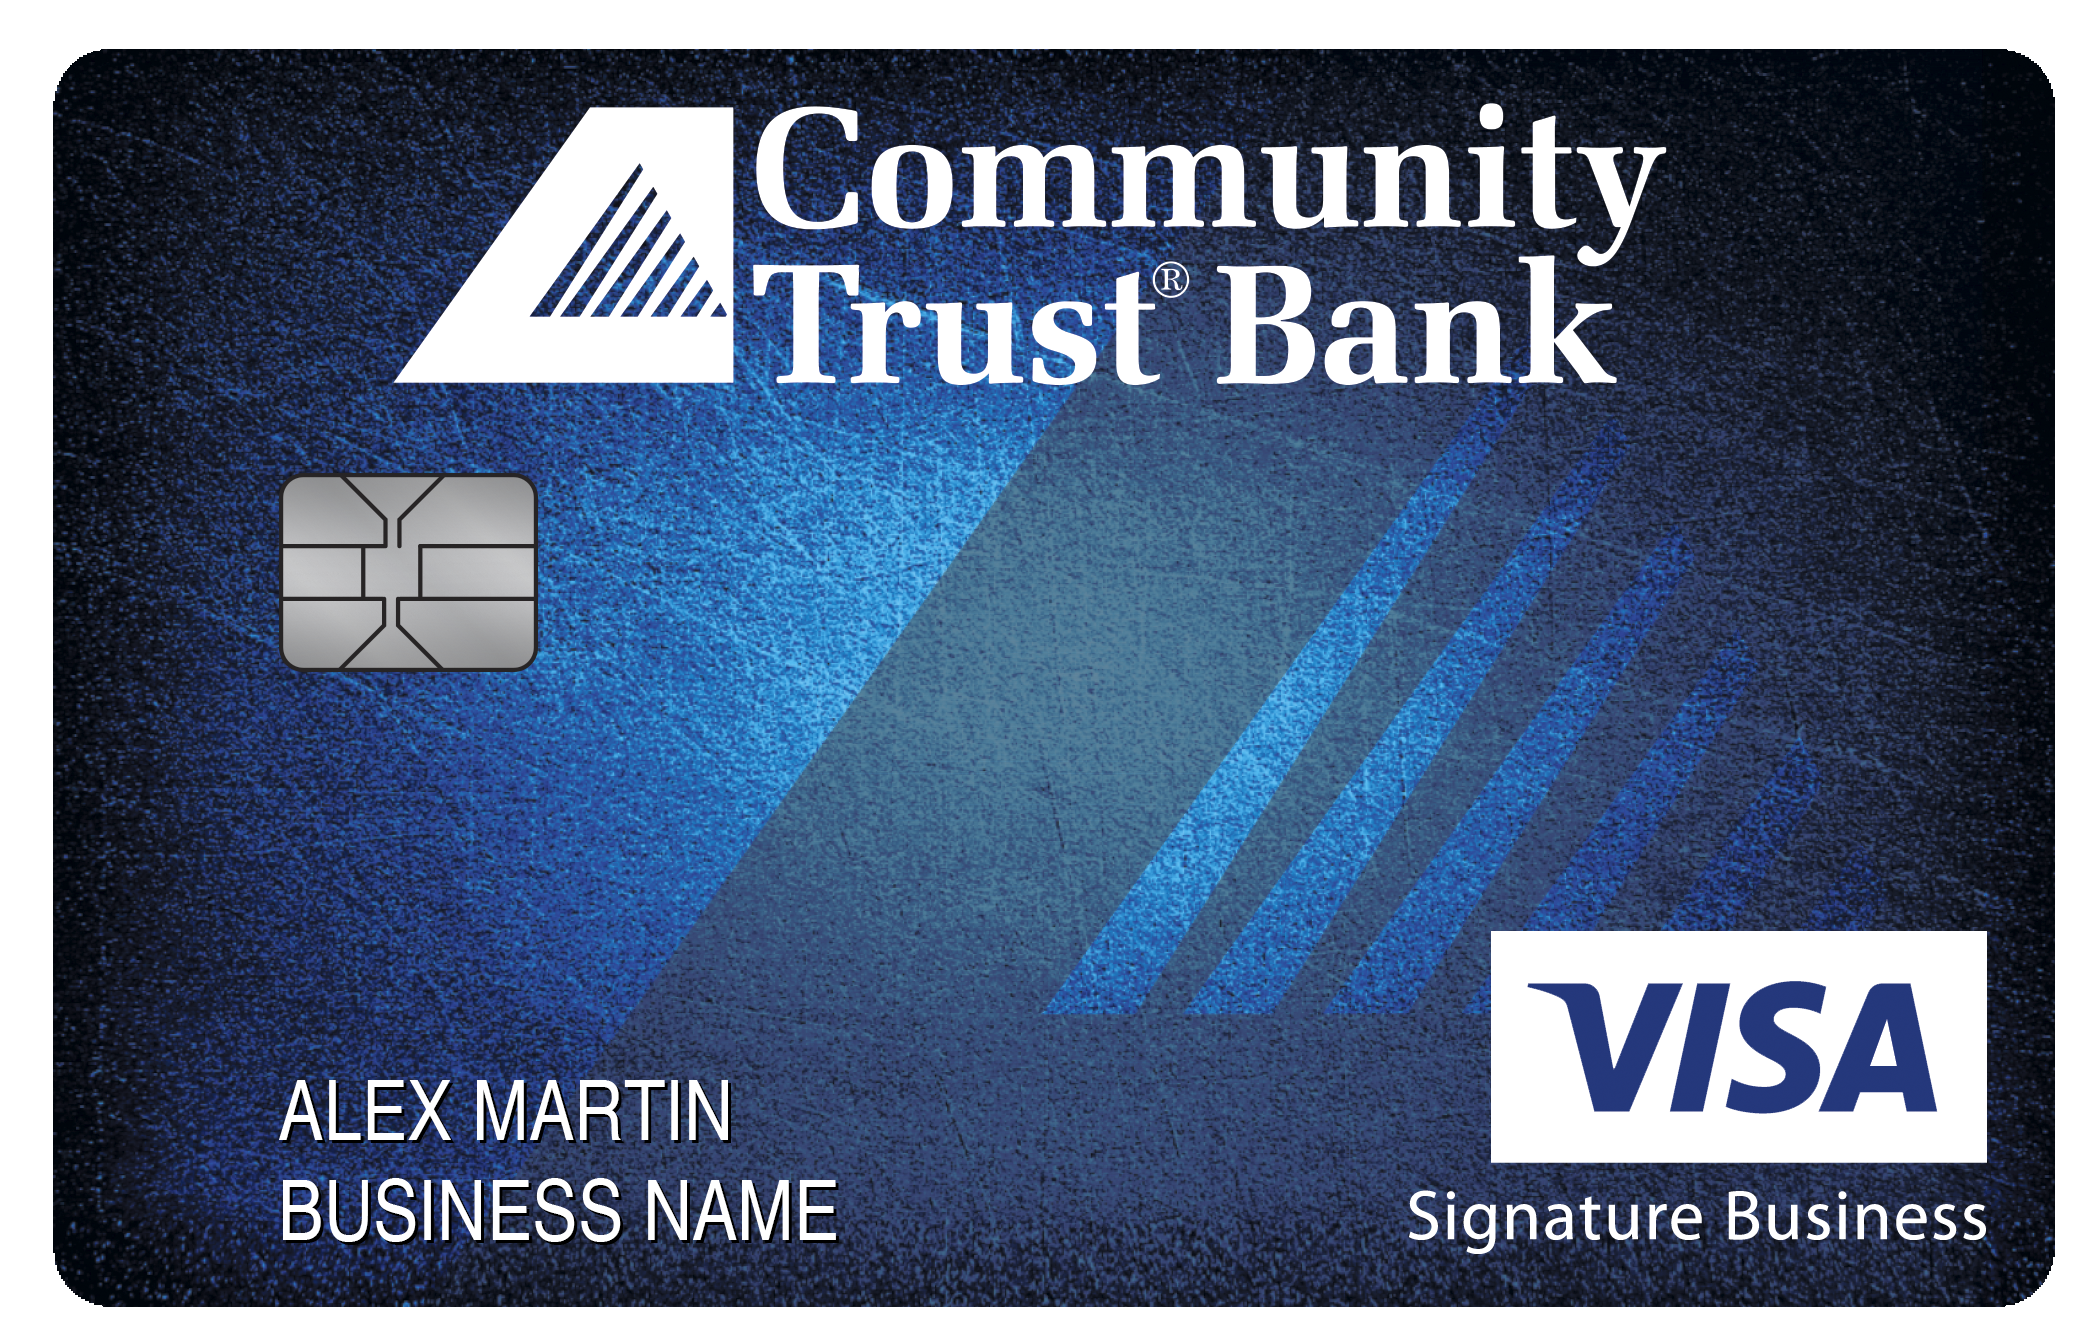 Community Trust Bank Smart Business Rewards Card